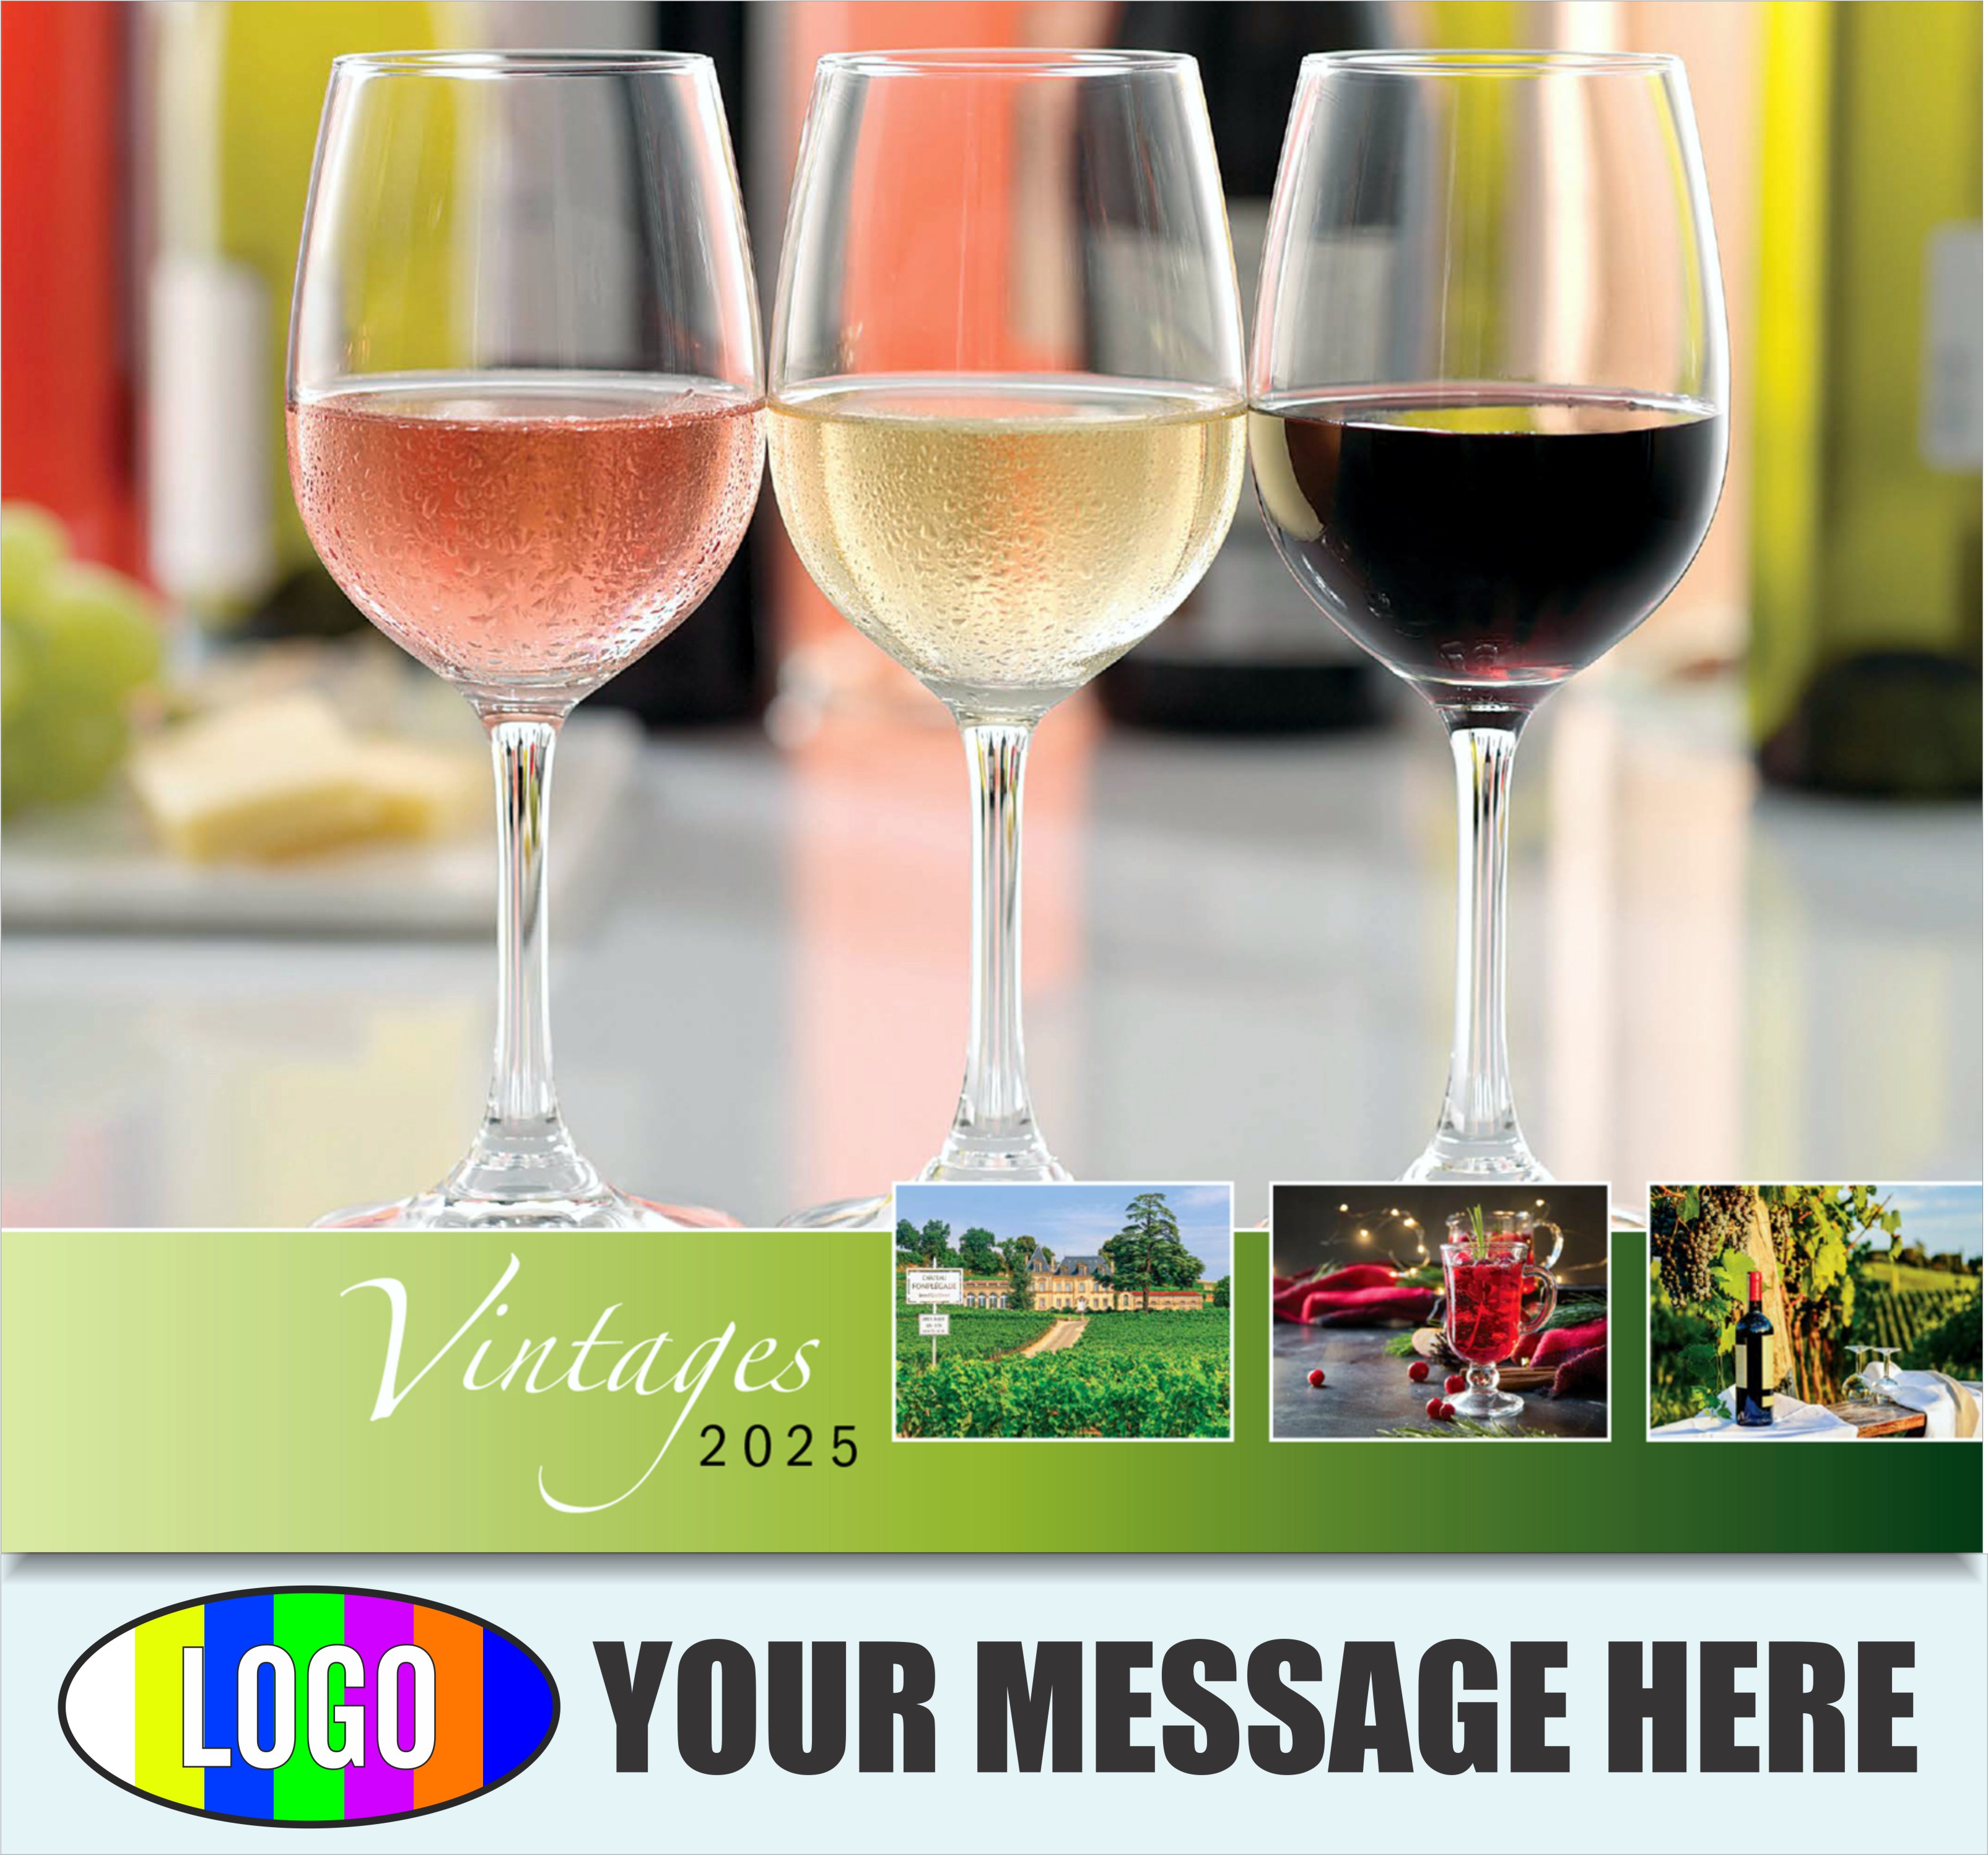 Vintages - Wine Tips 2025 Business Promo Calendar - cover